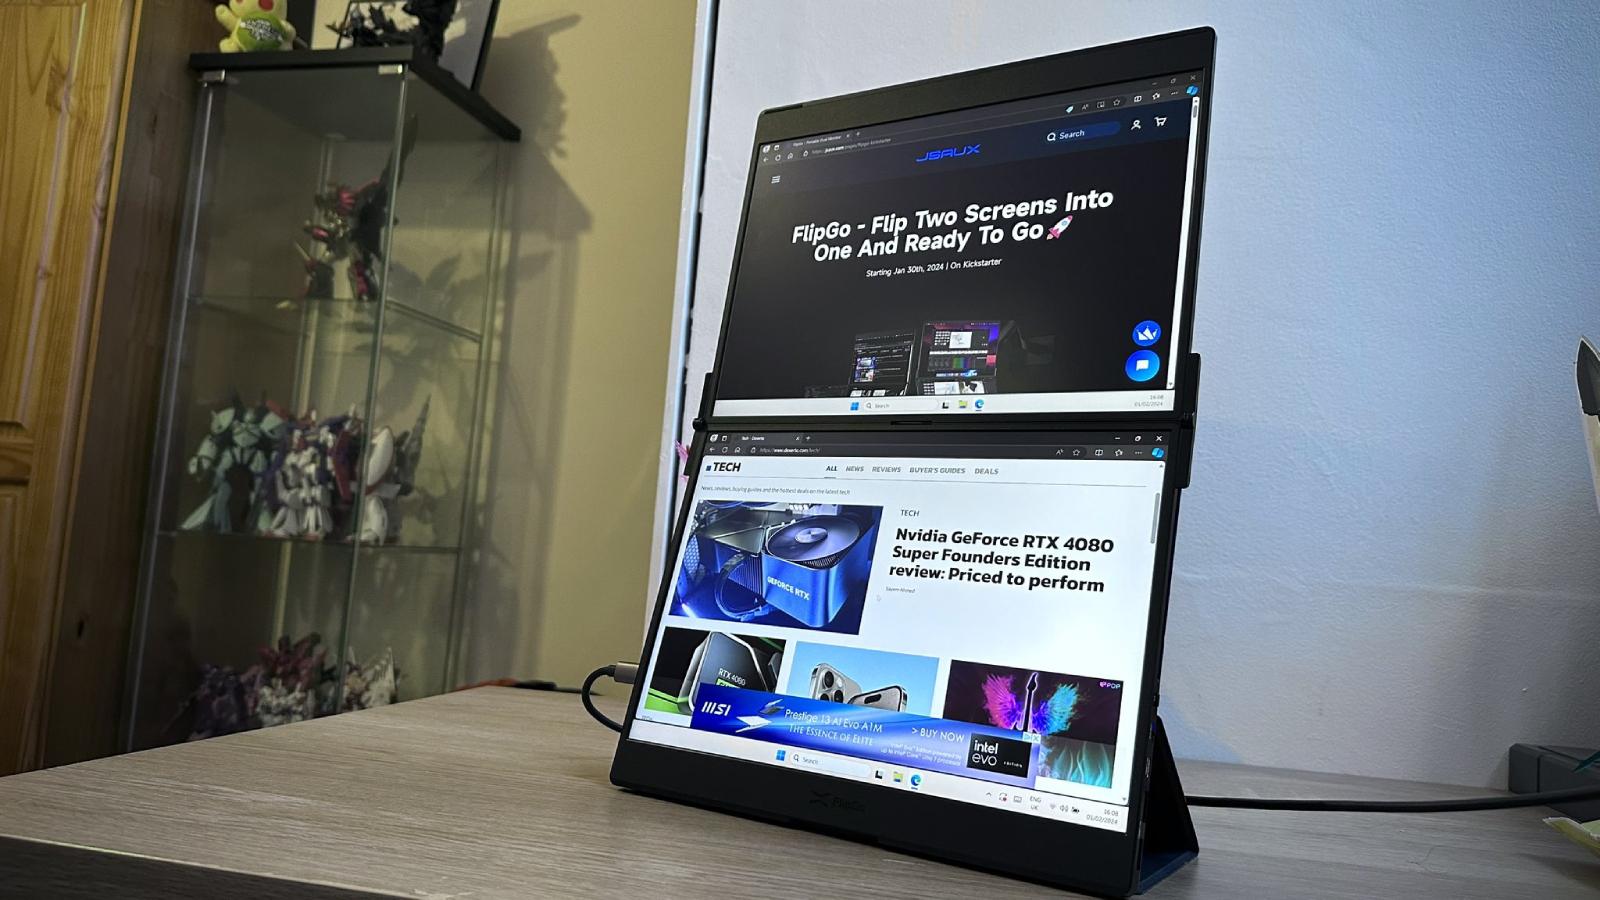 Flexispot Pro Plus Standing Desk E7 review: Is it worth it? - Dexerto